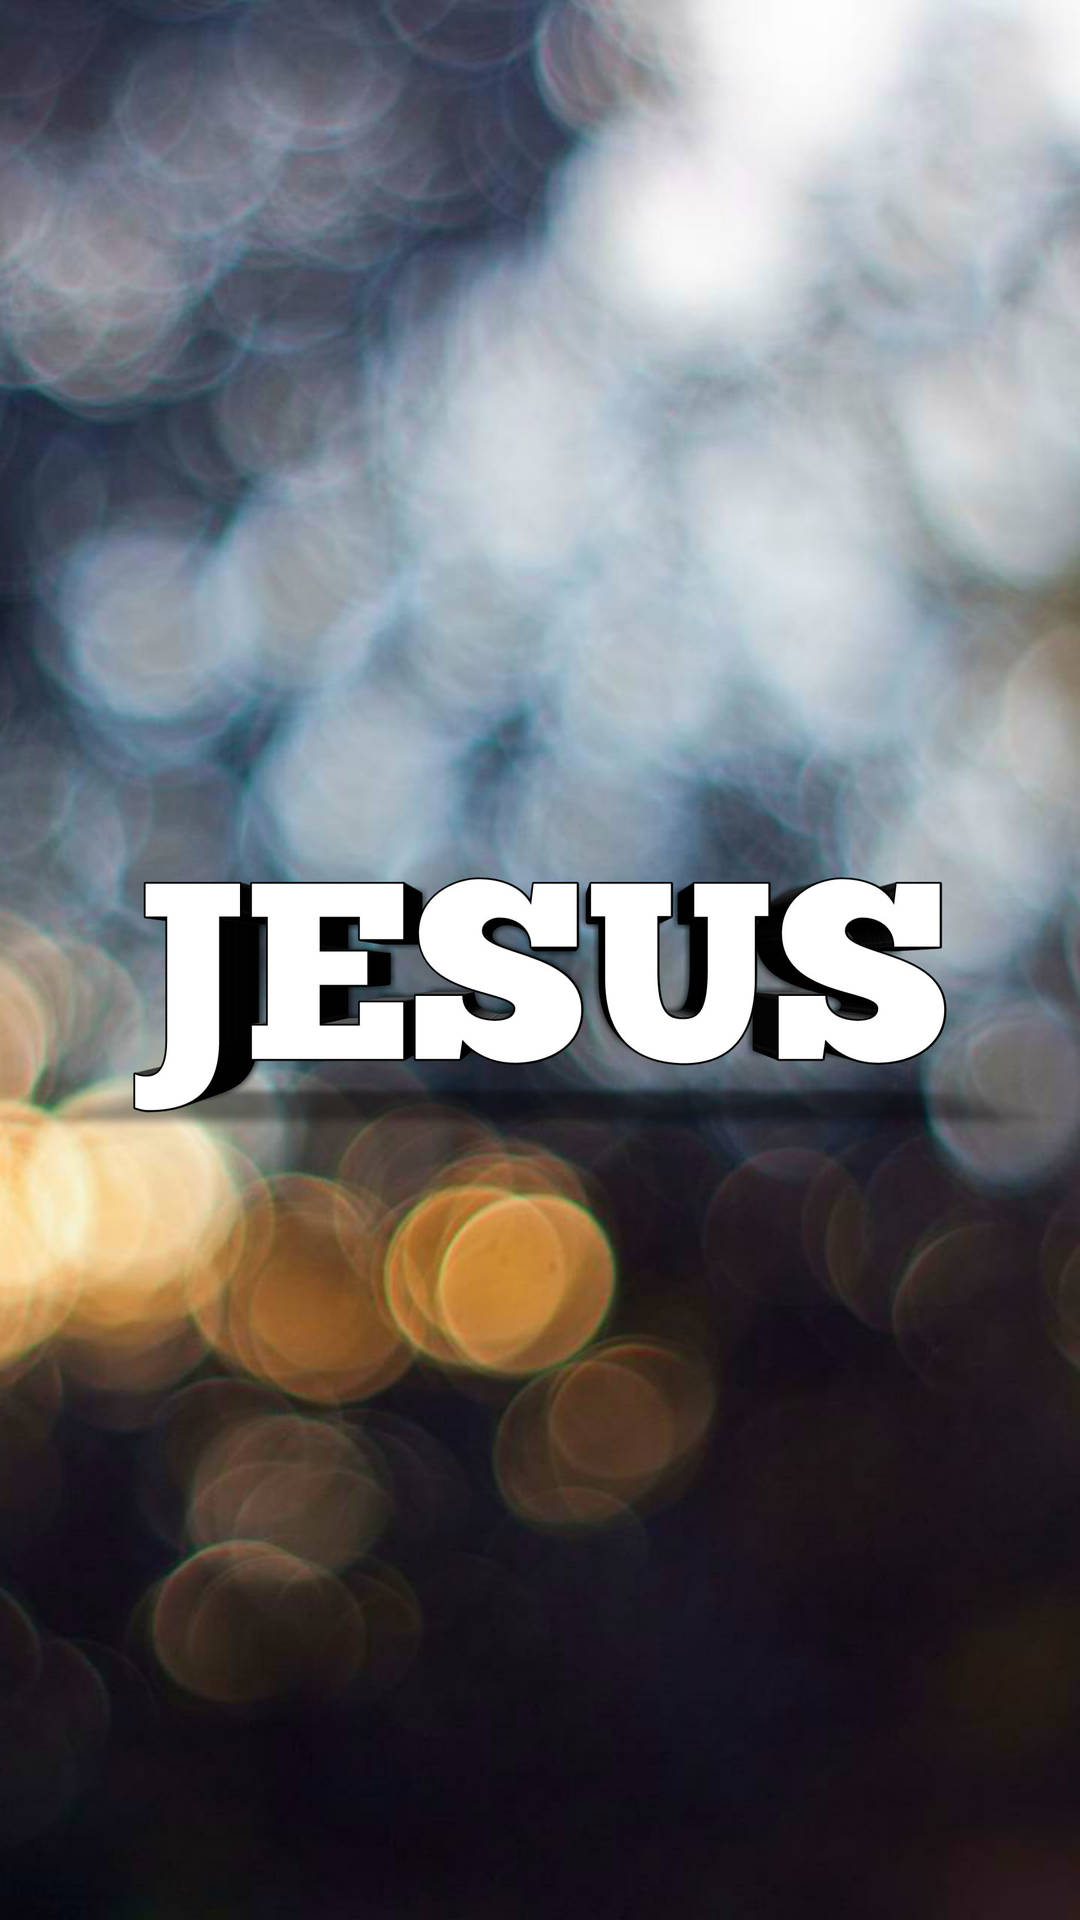 Our Savior Jesus 4K iPhone Wallpaper